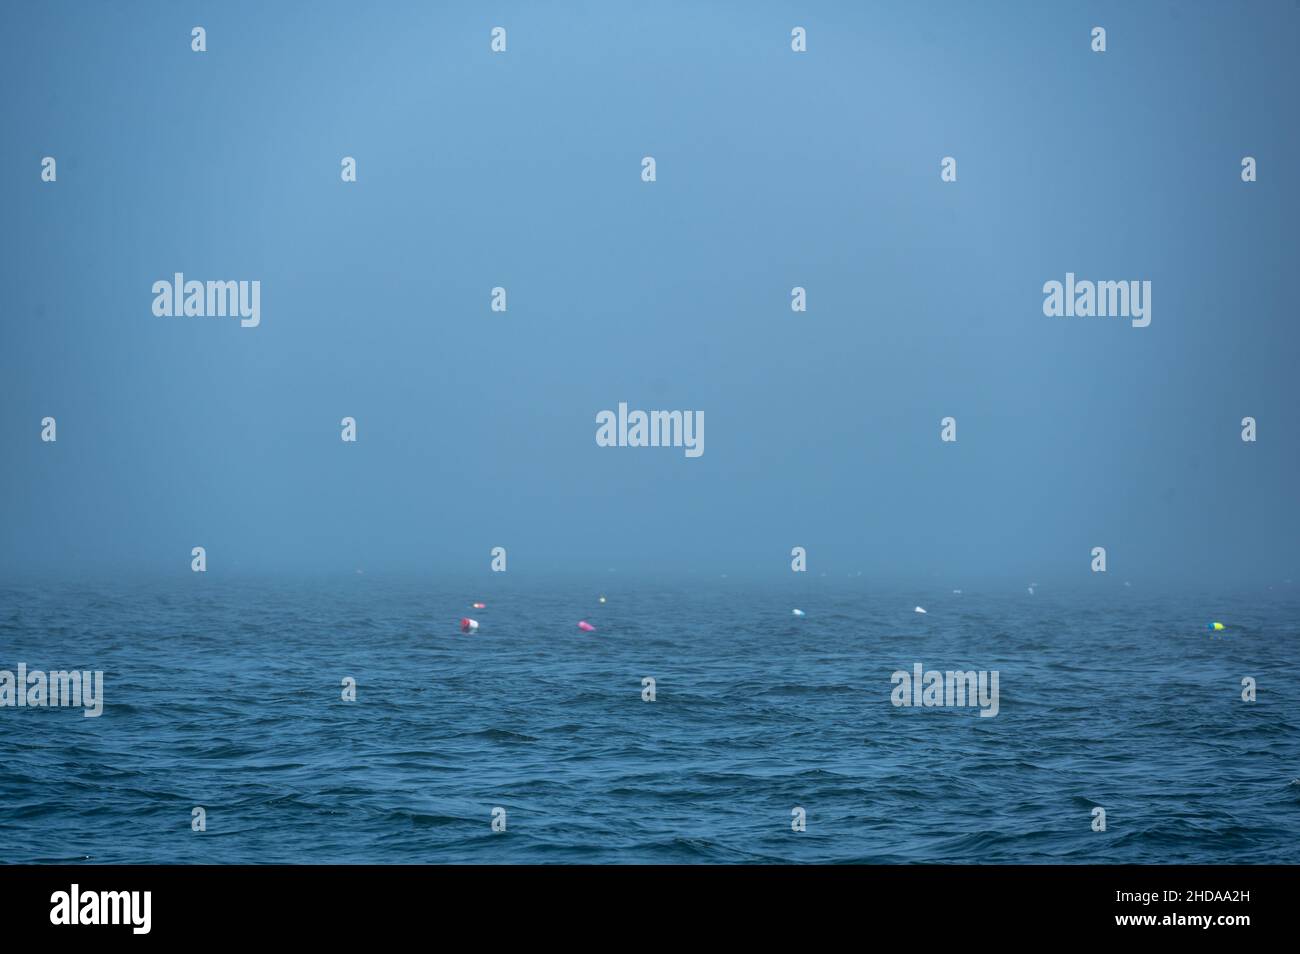 Lobster trap buoy floating on a choppy ocean in the Atlantic Ocean Stock Photo